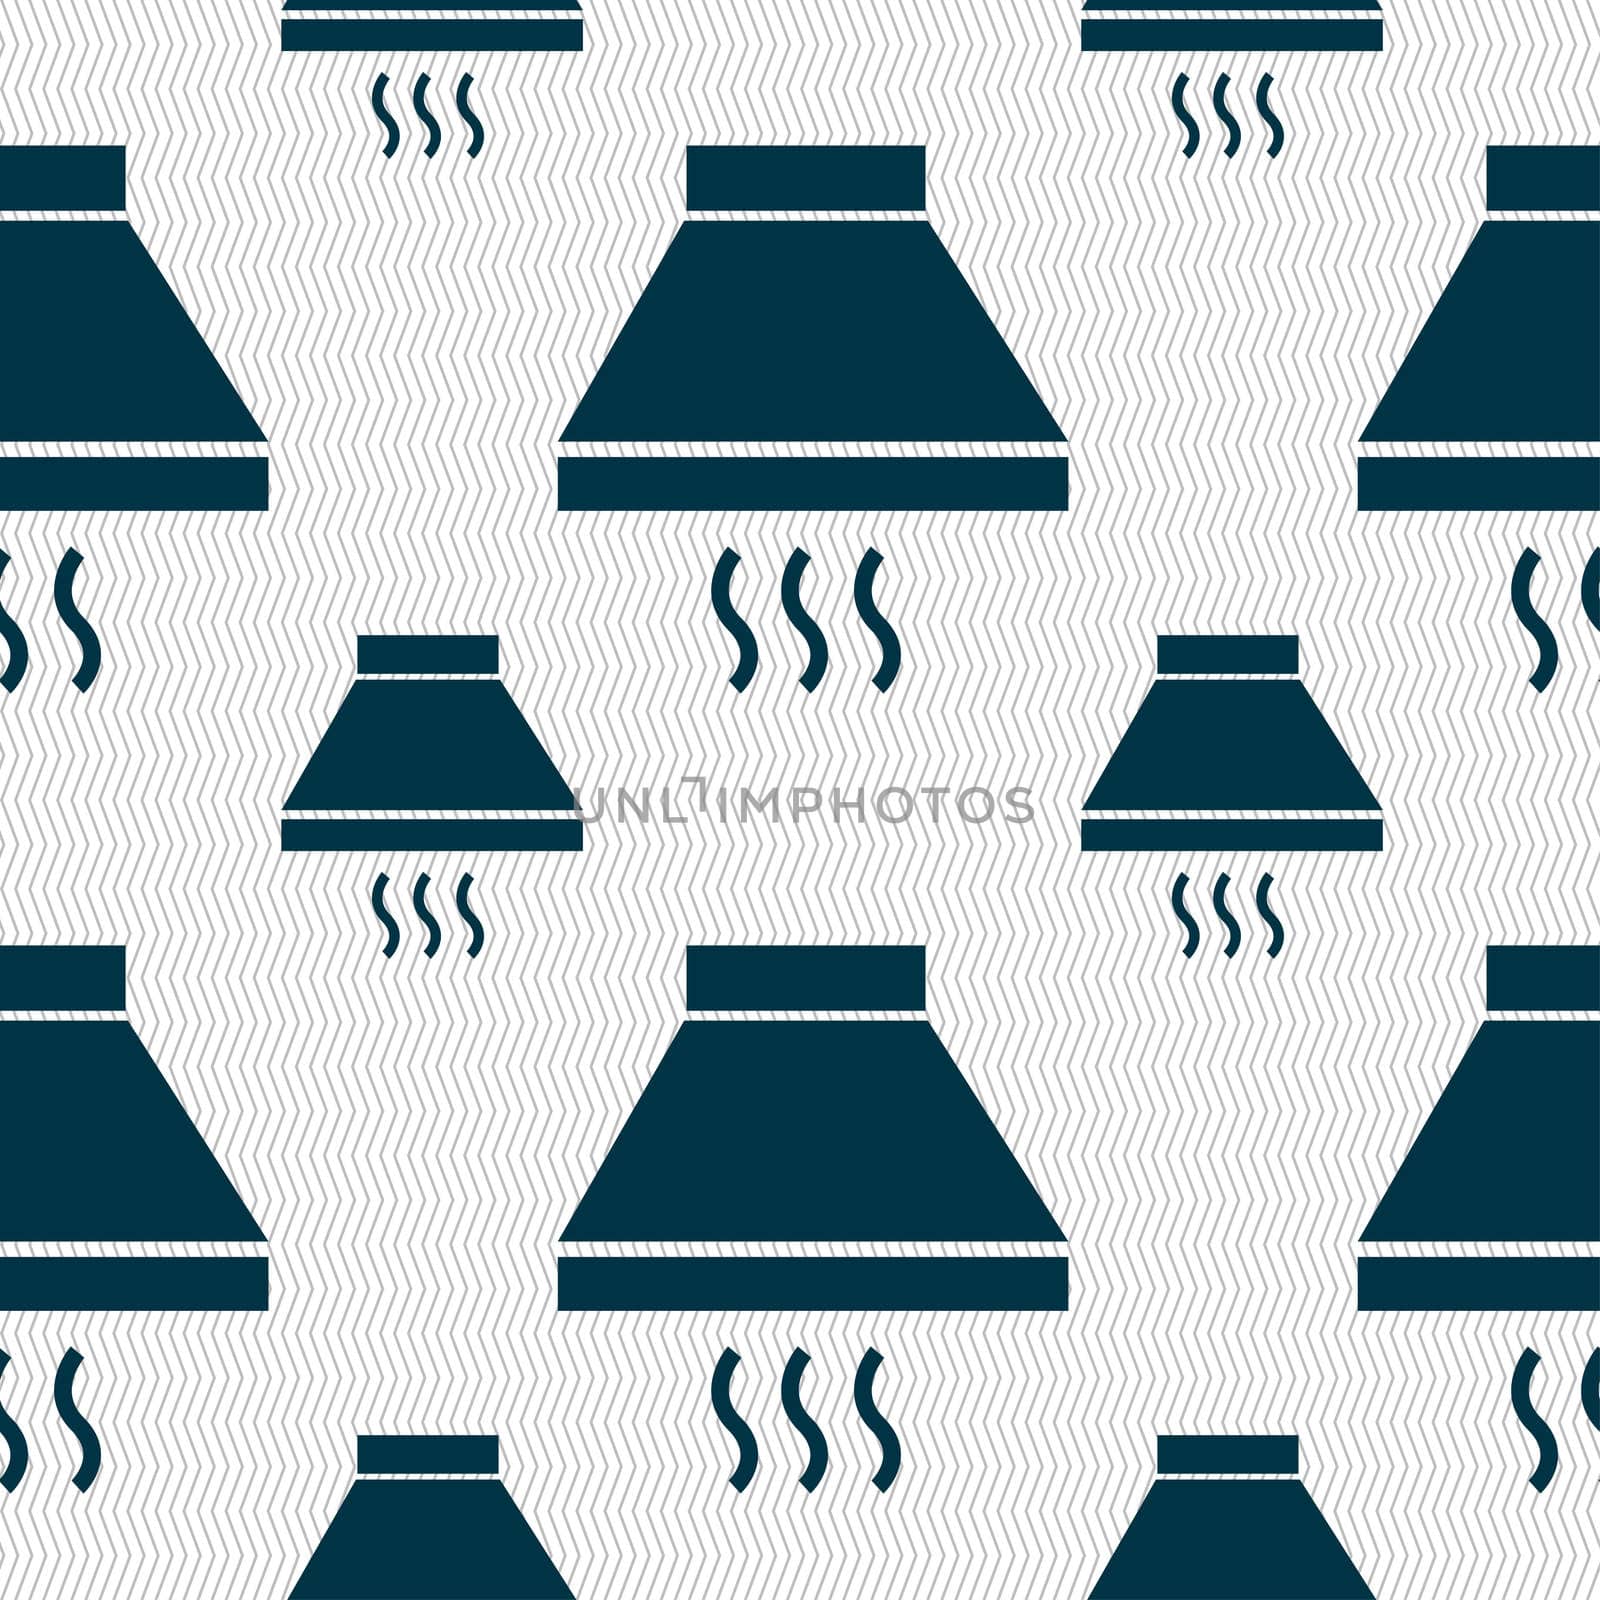 Kitchen hood icon sign. Seamless pattern with geometric texture. illustration